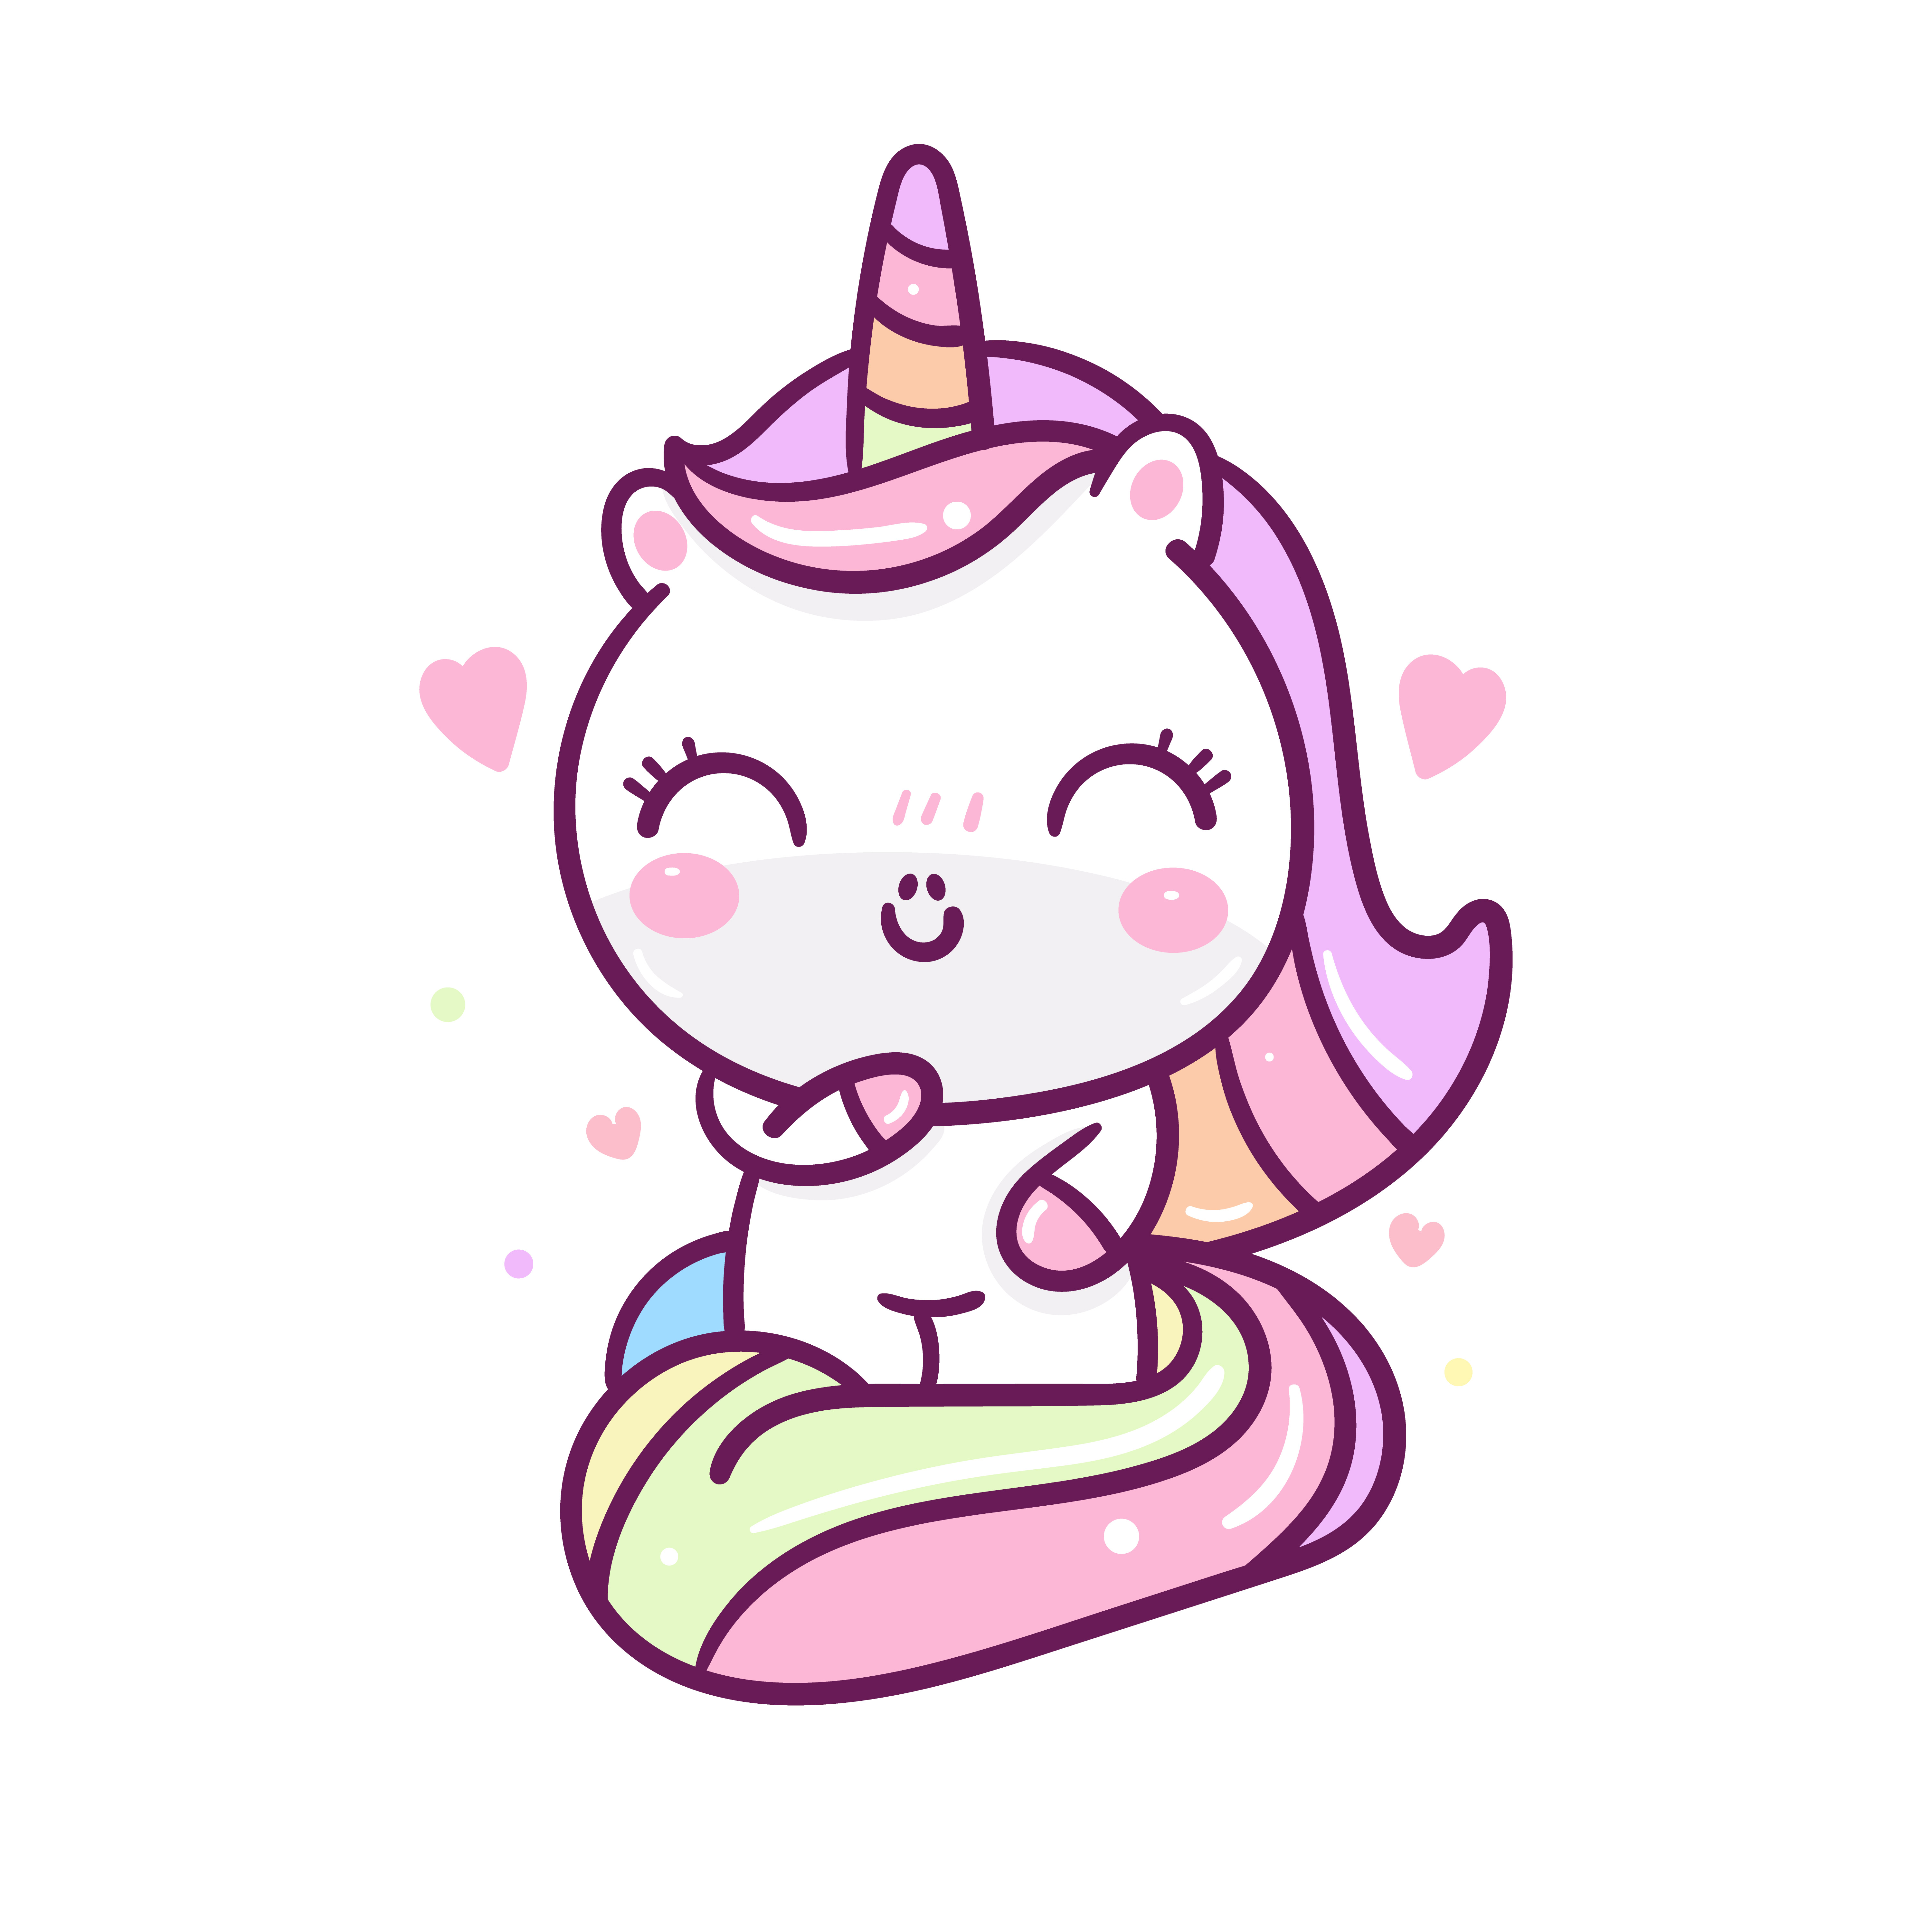 Smiley Kawaii Unicorn Character Download Free Vectors Clipart